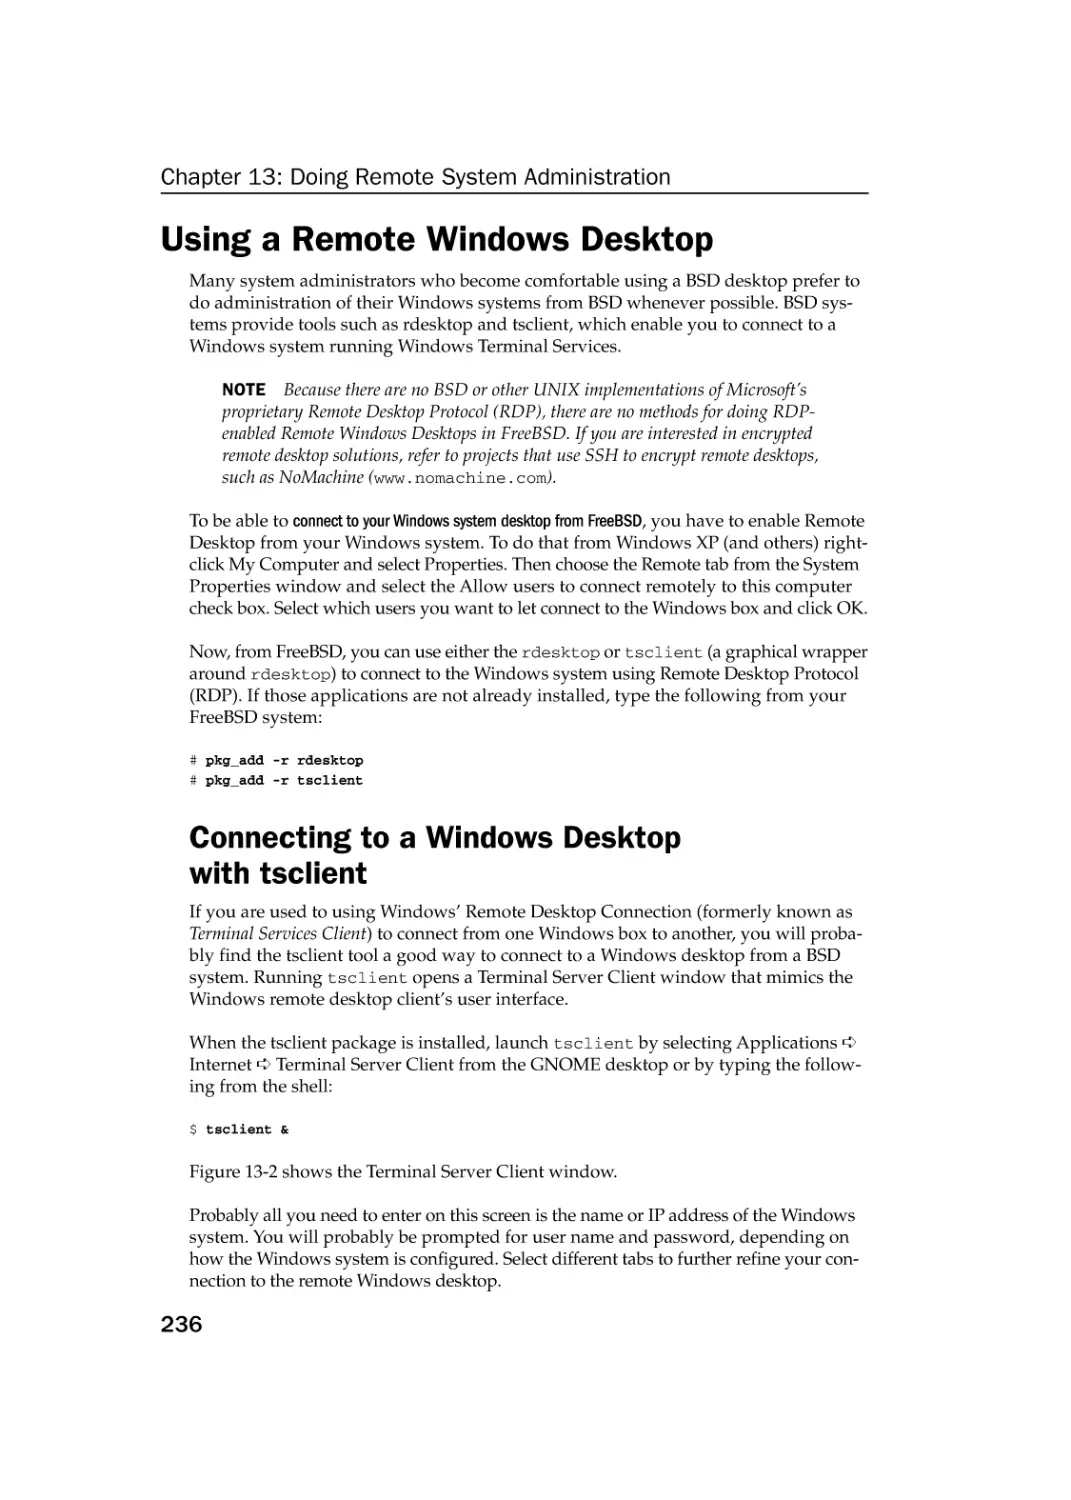 Using a Remote Windows Desktop